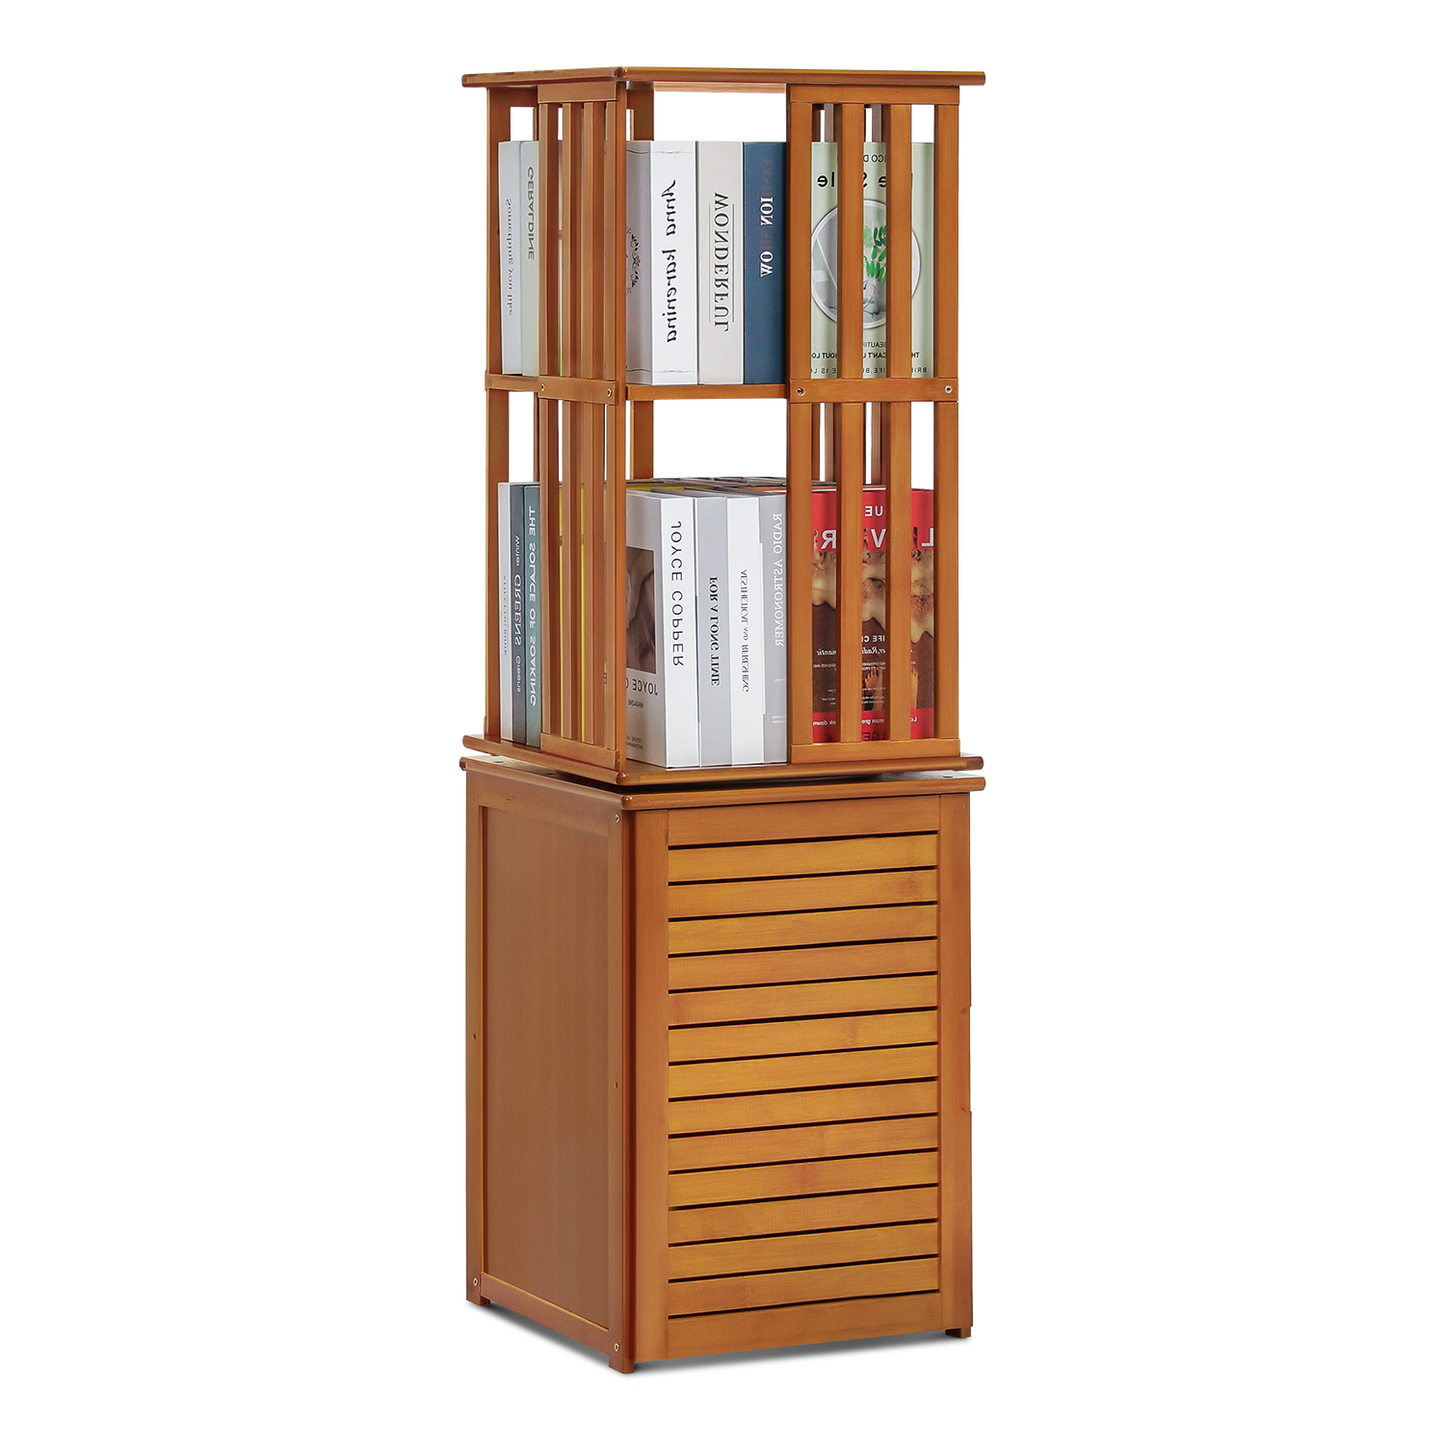 360°Swivel Bookshelf - Vertical Fence Pattern - with Bottom Cabinet Storage - 15" - Brown